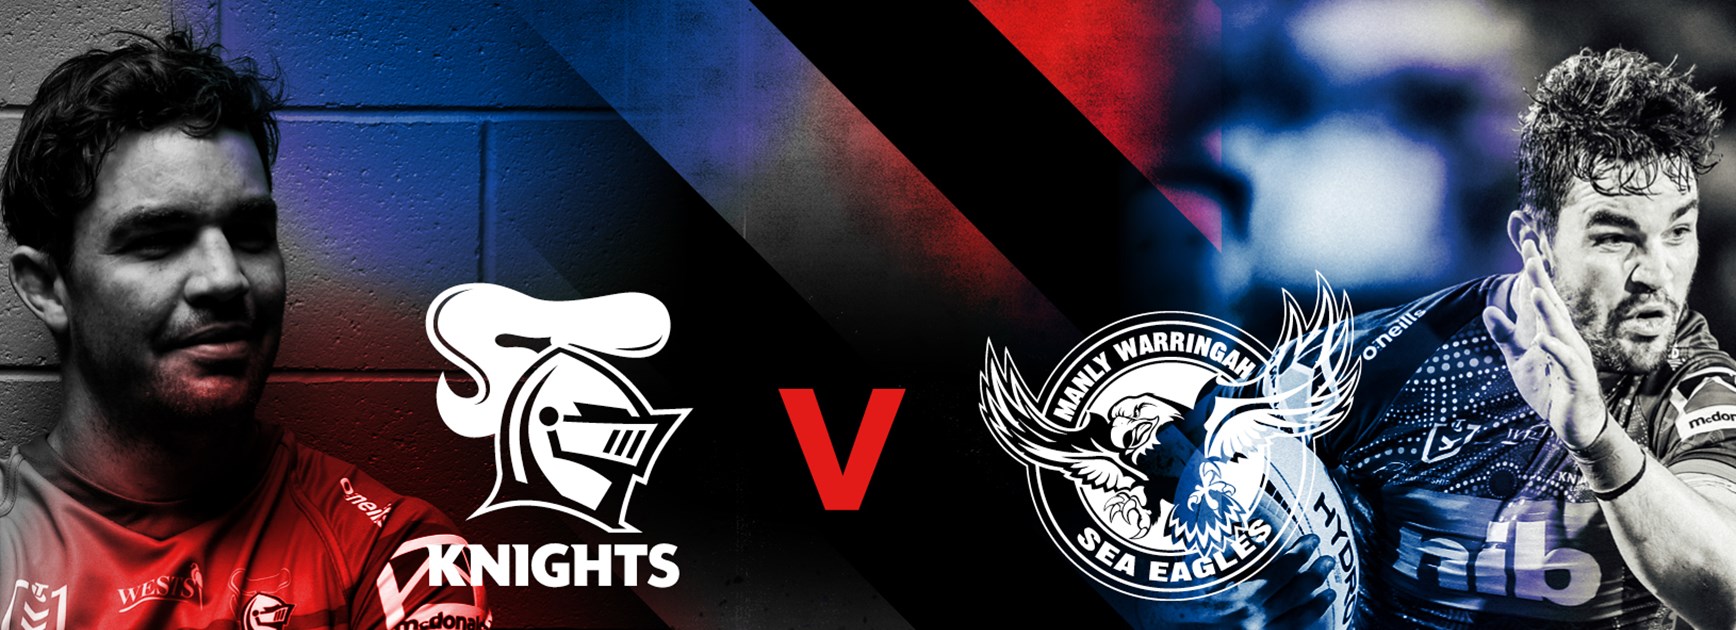 Knights v Sea Eagles Round 14 NRL team list